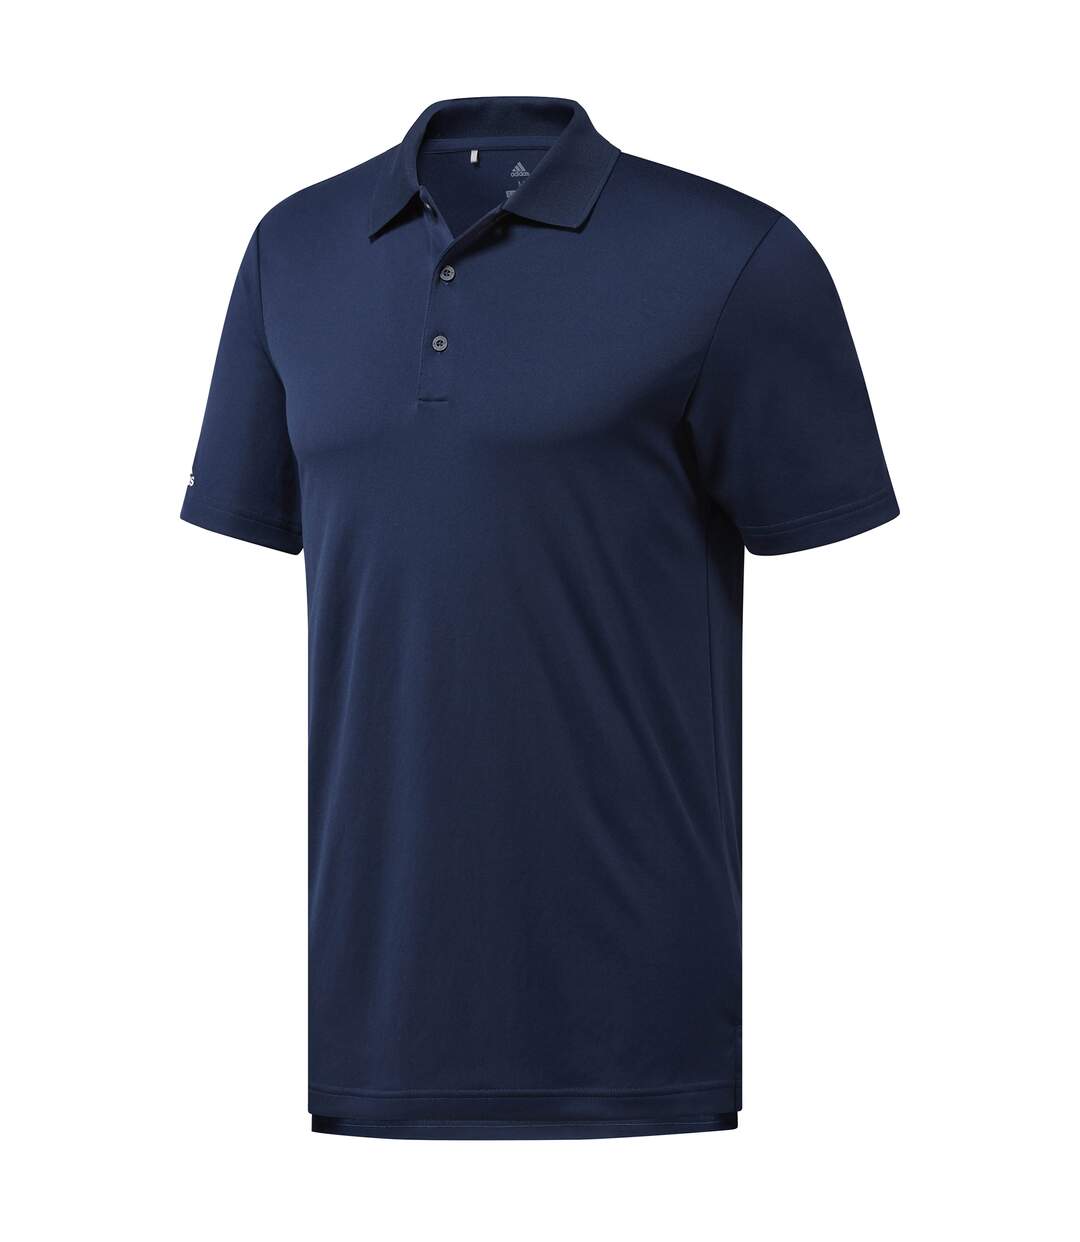 Adidas Mens Performance Polo Shirt (Collegiate Navy) - UTRW6133